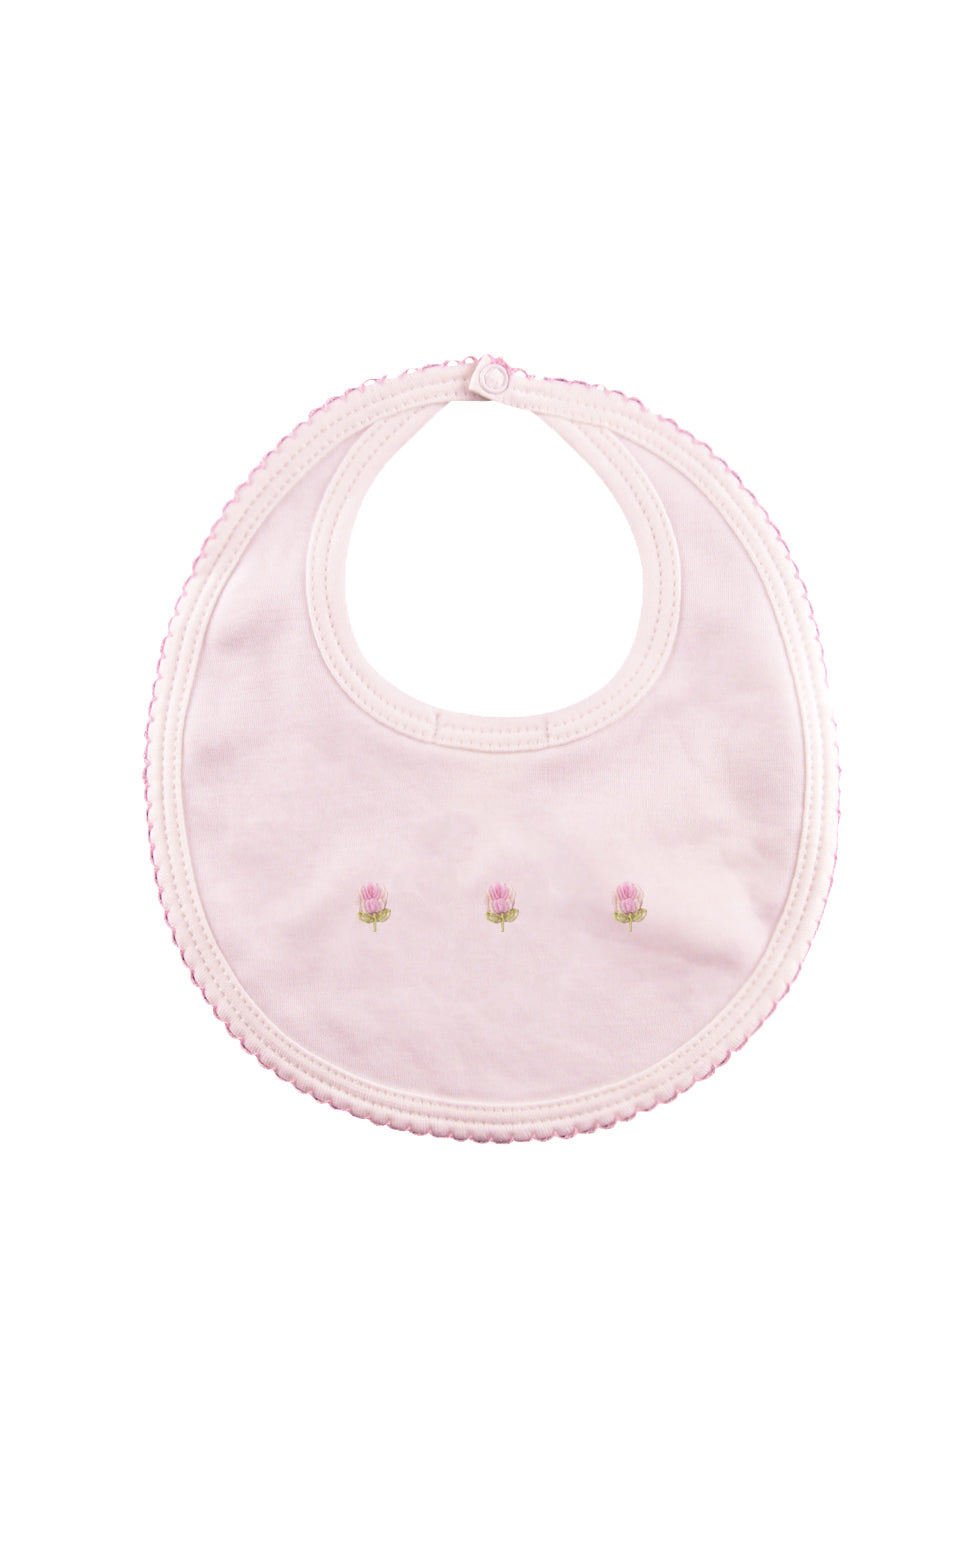 Baby Girl's Pink Flower Bib - Little Threads Inc. Children's Clothing